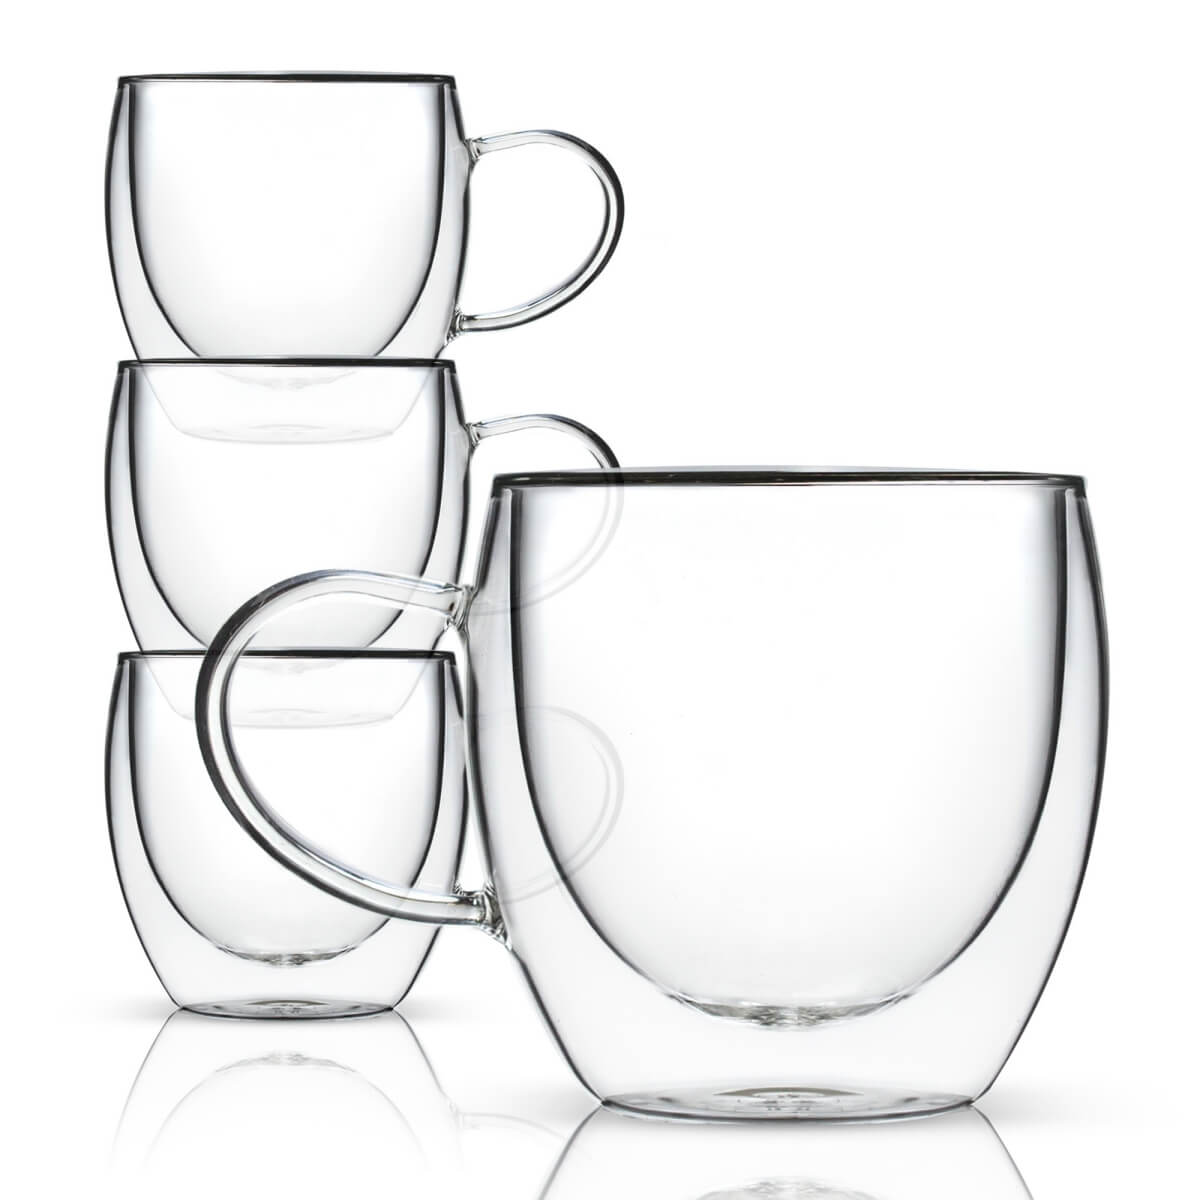 Double Walled Glass Perfect Mug